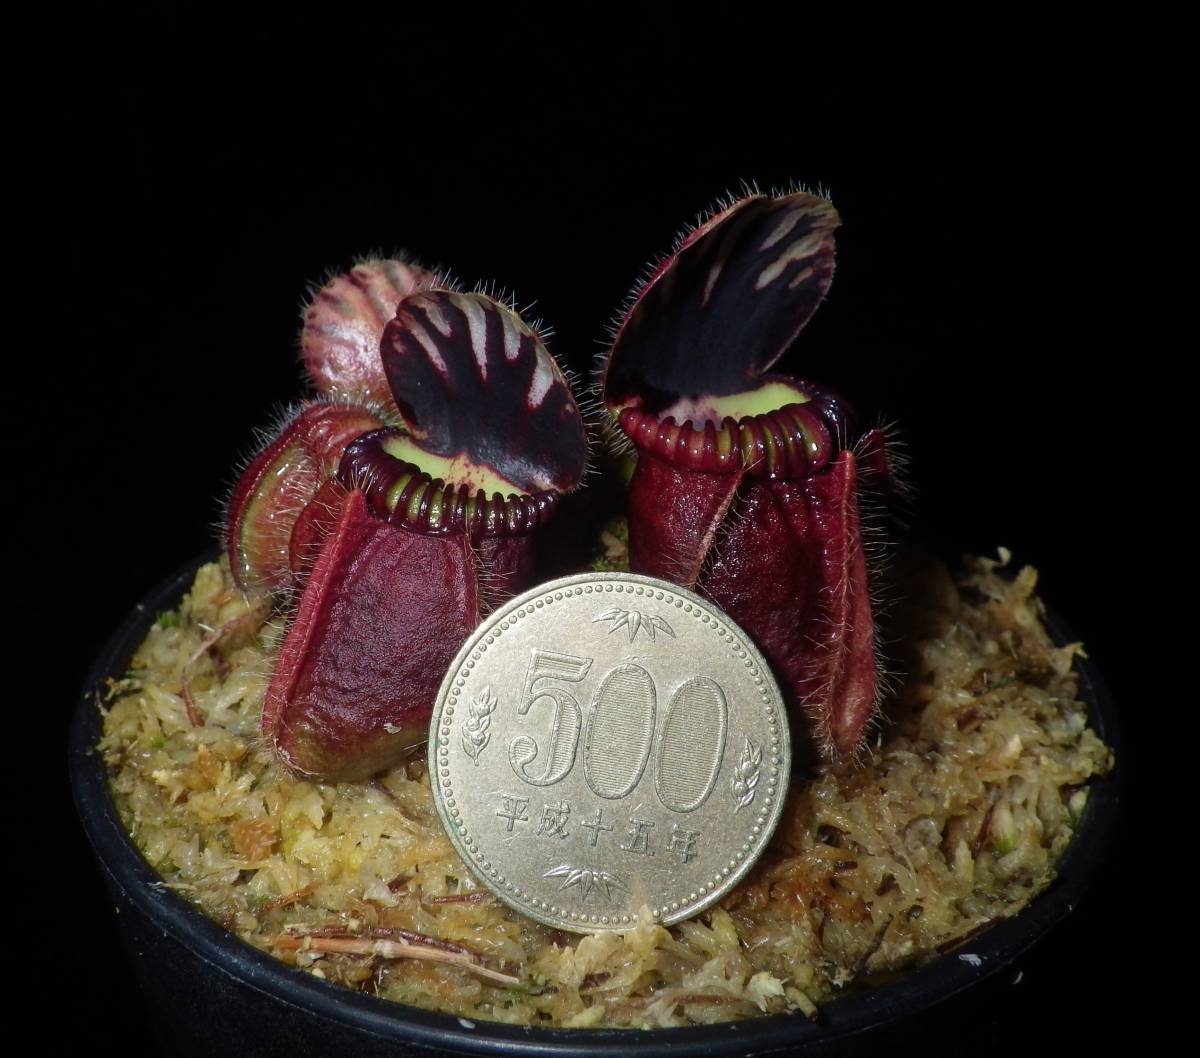 Cephalotus follicularis ”Eden black” Cedric・セファロタス エデンブラック ・食虫植物・観葉植物・熱帯植物・パルダリウム・山野草_画像5